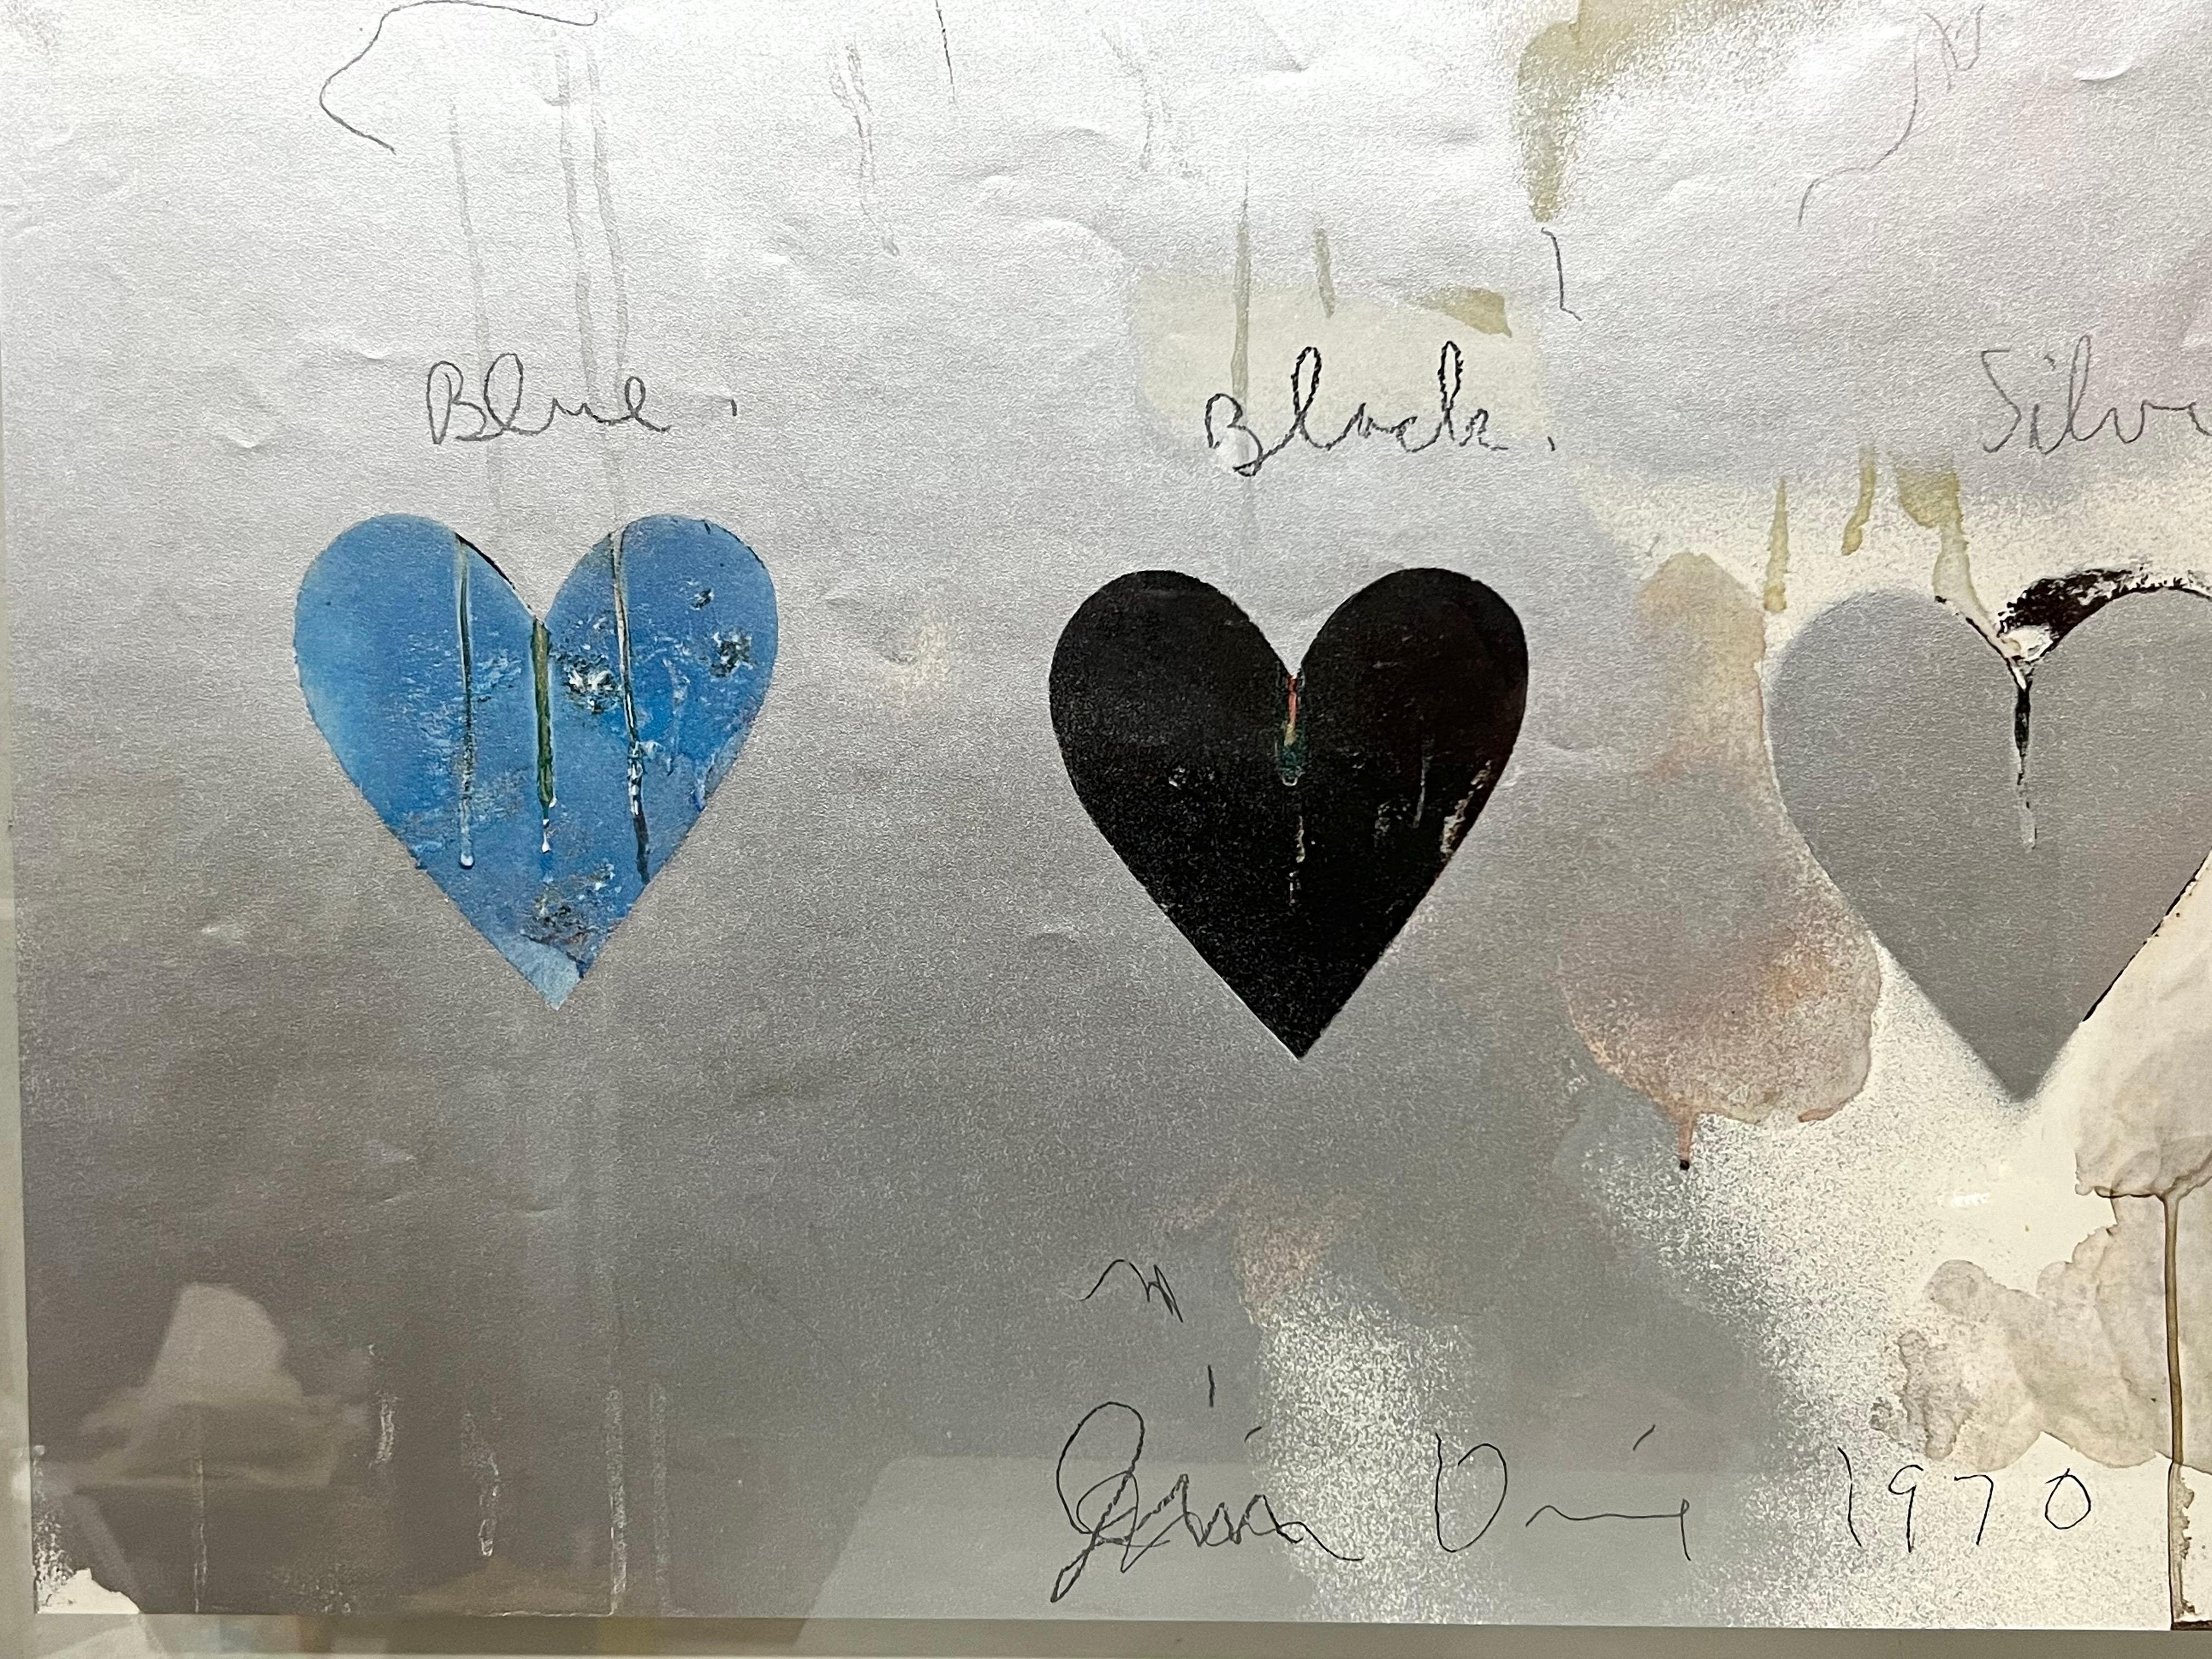 Paper Jim Dine 8 Hearts Pencil Signed Original Lithograph For Sale